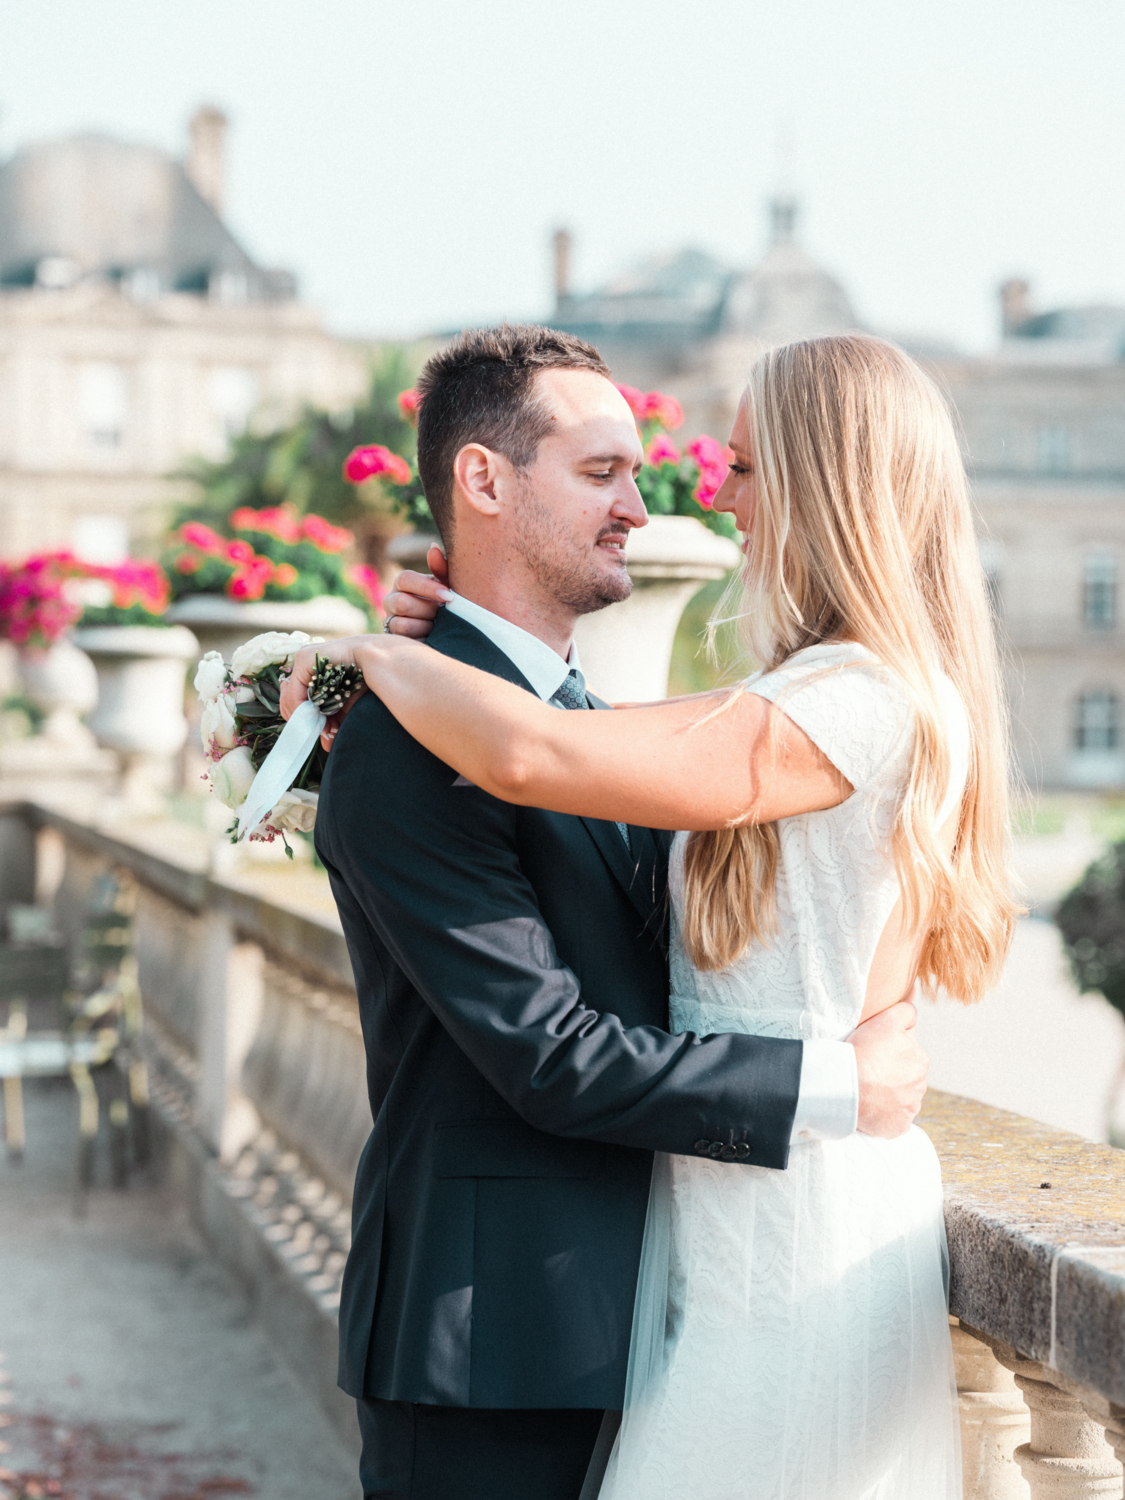 newlywed bride and groom embrace in garden in paris